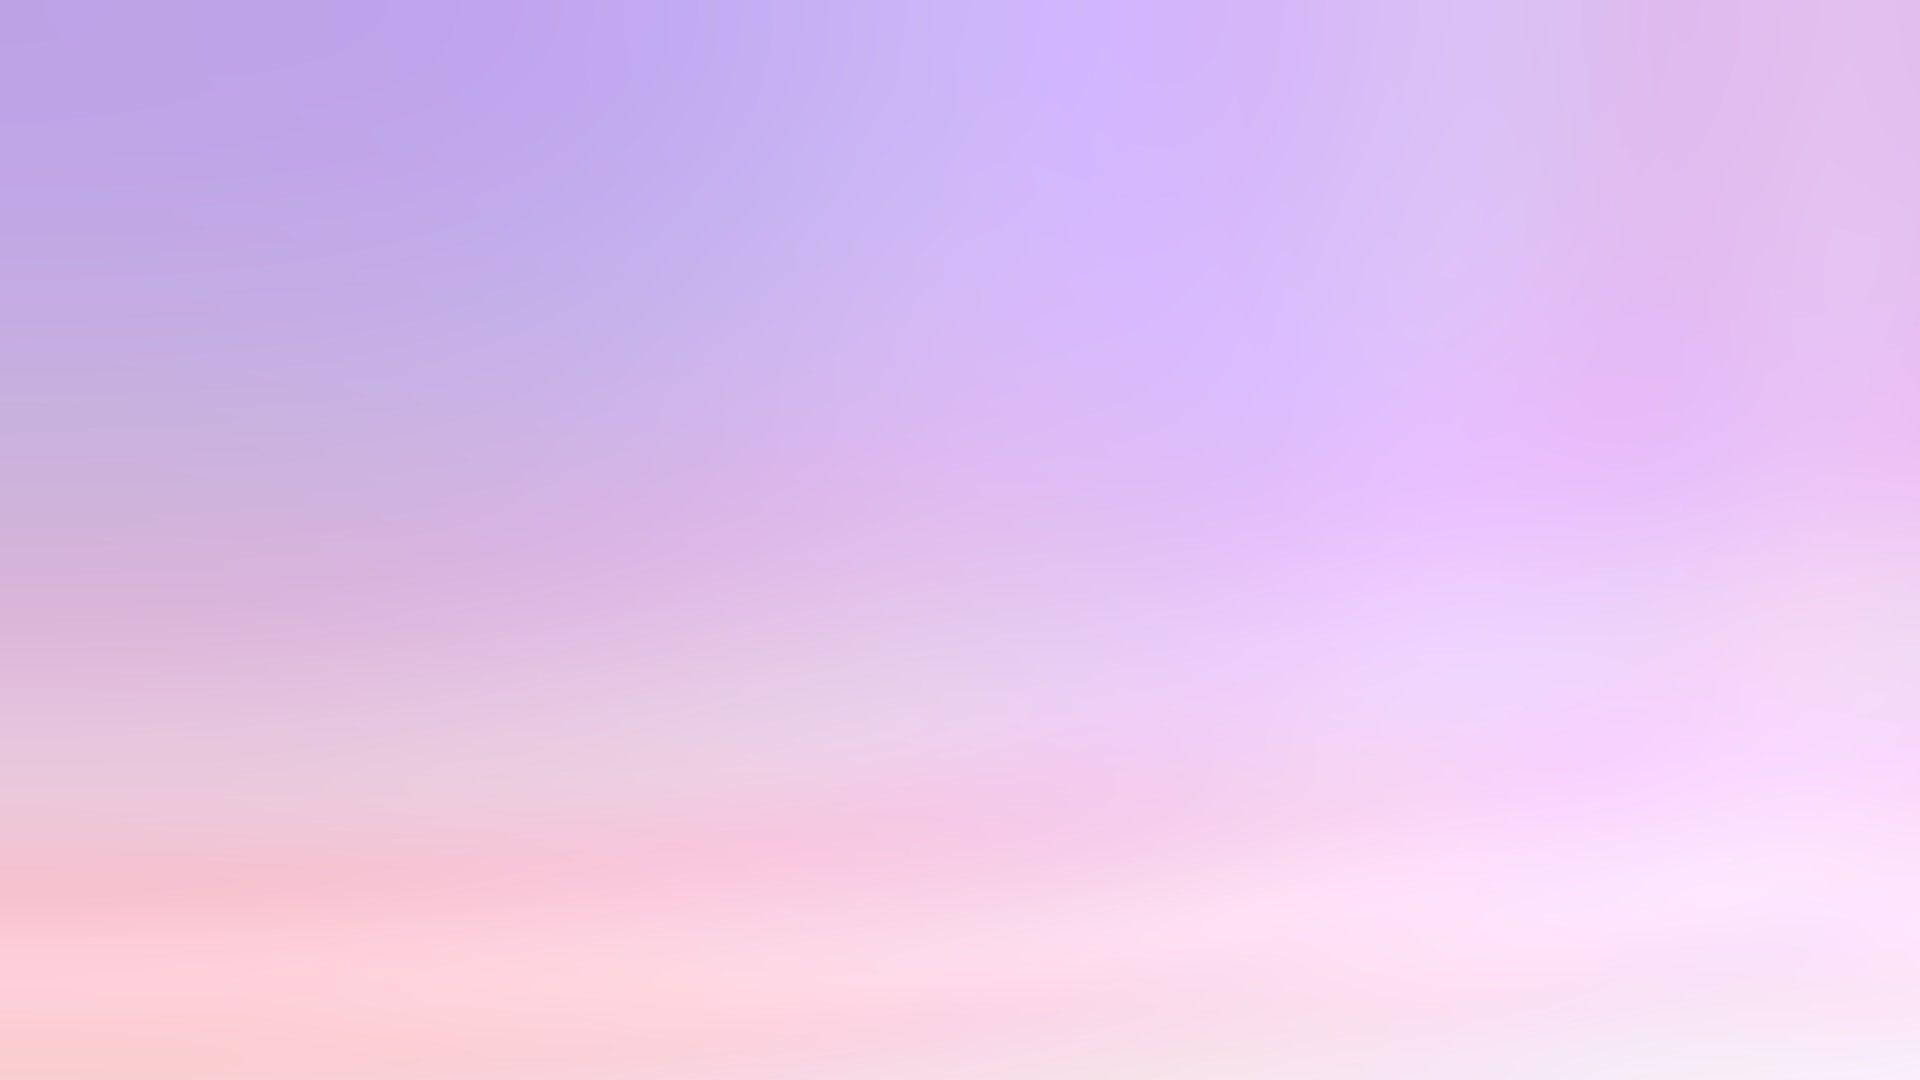 Pink And Purple Gradient Pastel Aesthetic Tumblr Laptop Wallpaper